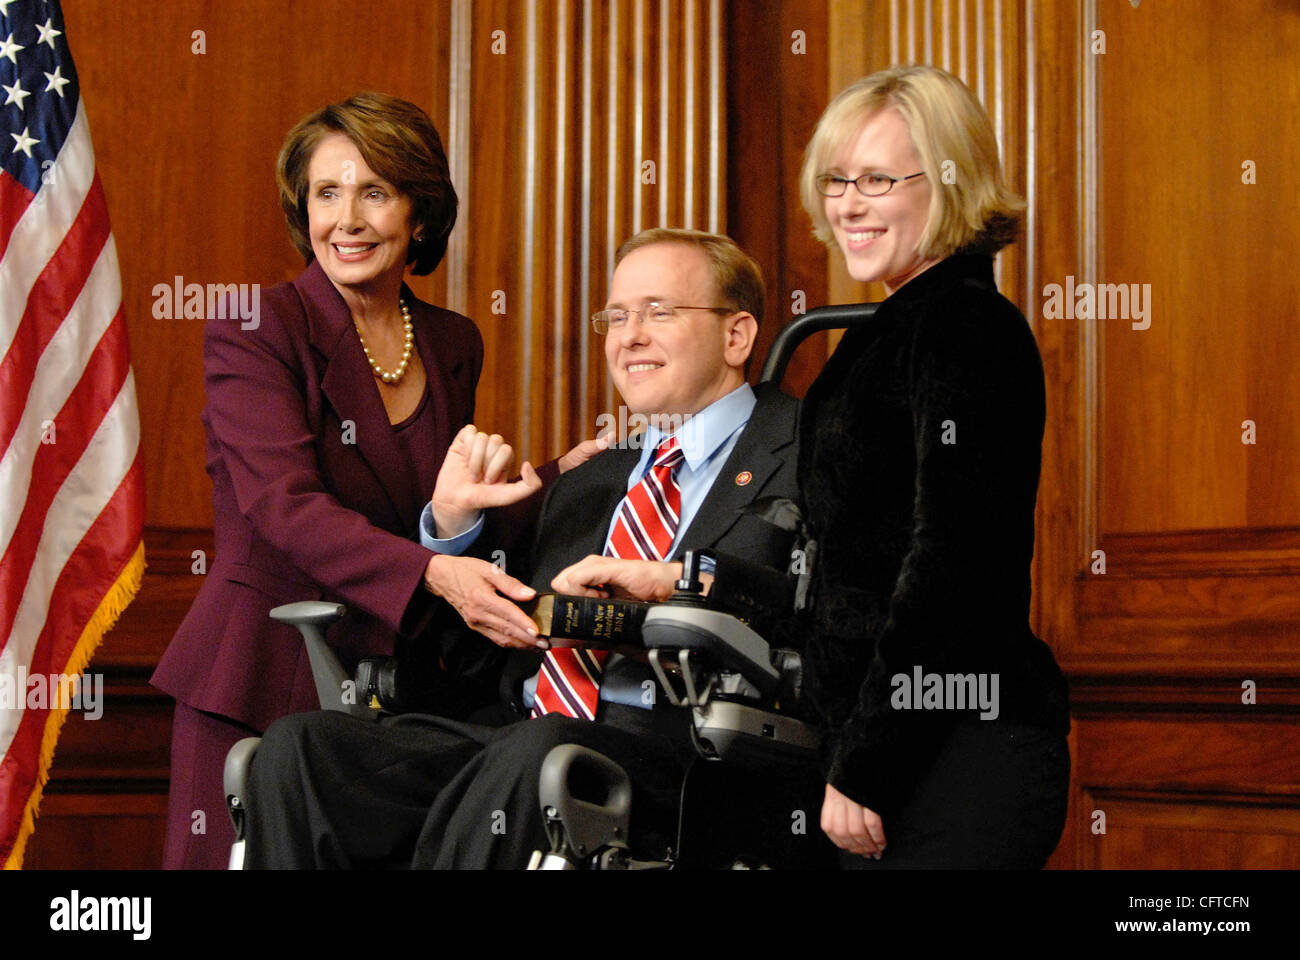 Jan 04, 2007 - Washington, DC, USA - Speaker of the House NANCY PELOSI swears in Rep. JAMES LANGEVIN (D-RI) for the 110th Congress. Stock Photo